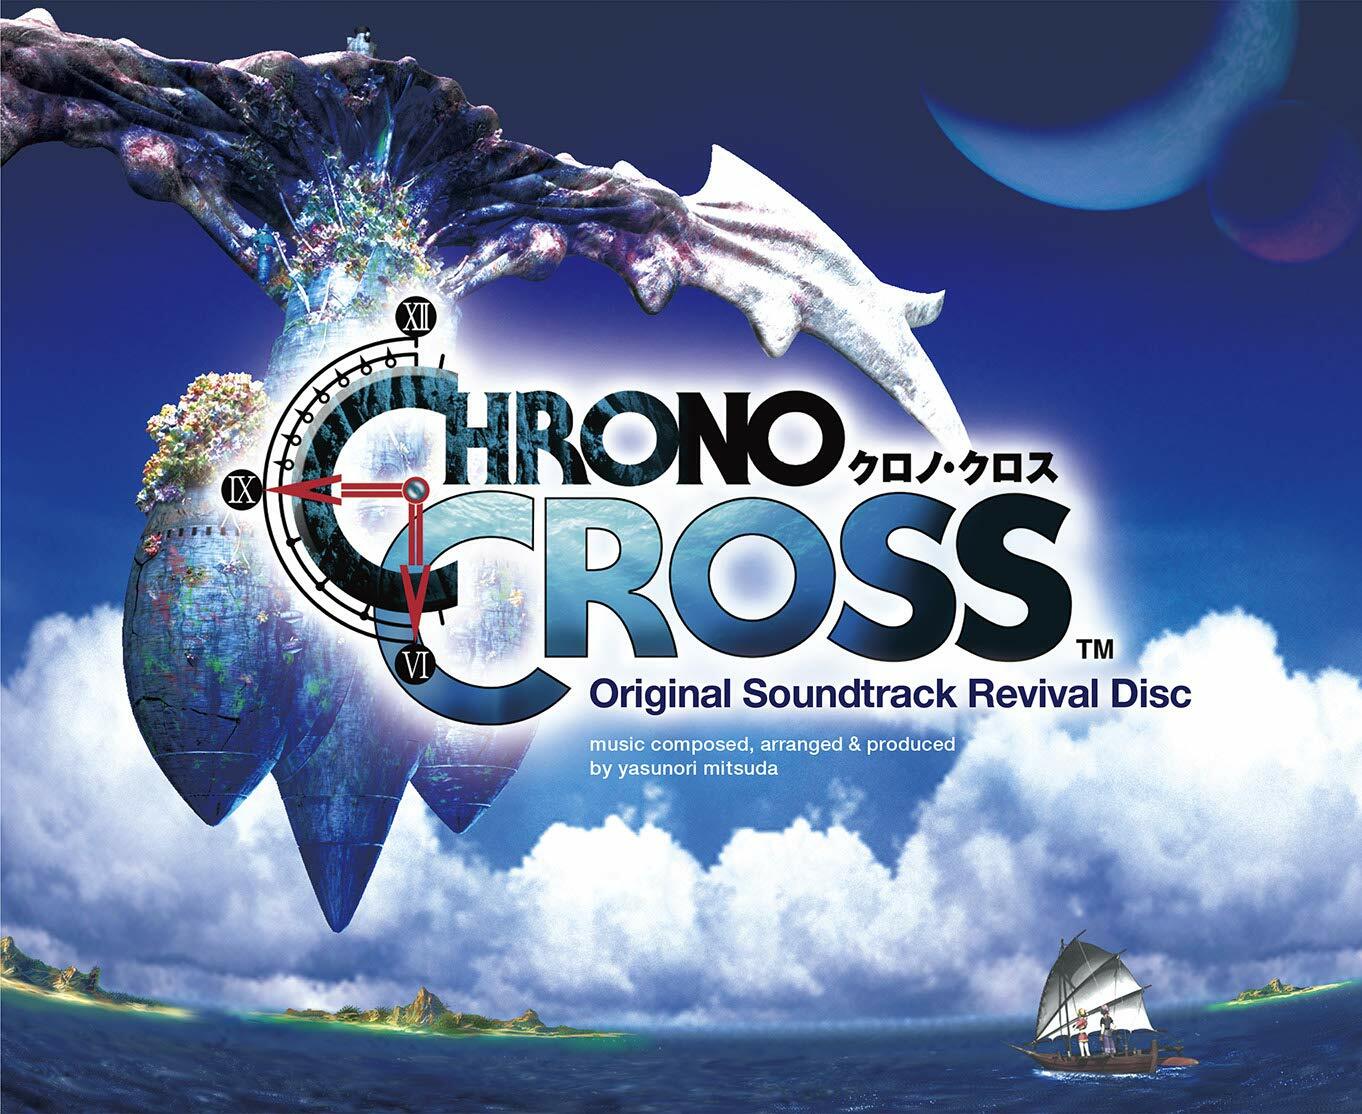 Chrono Cross Original Soundtrack Revival Disc 【映像付サントラ/Blu-ray Disc Music】 (通常盤) (特典なし)